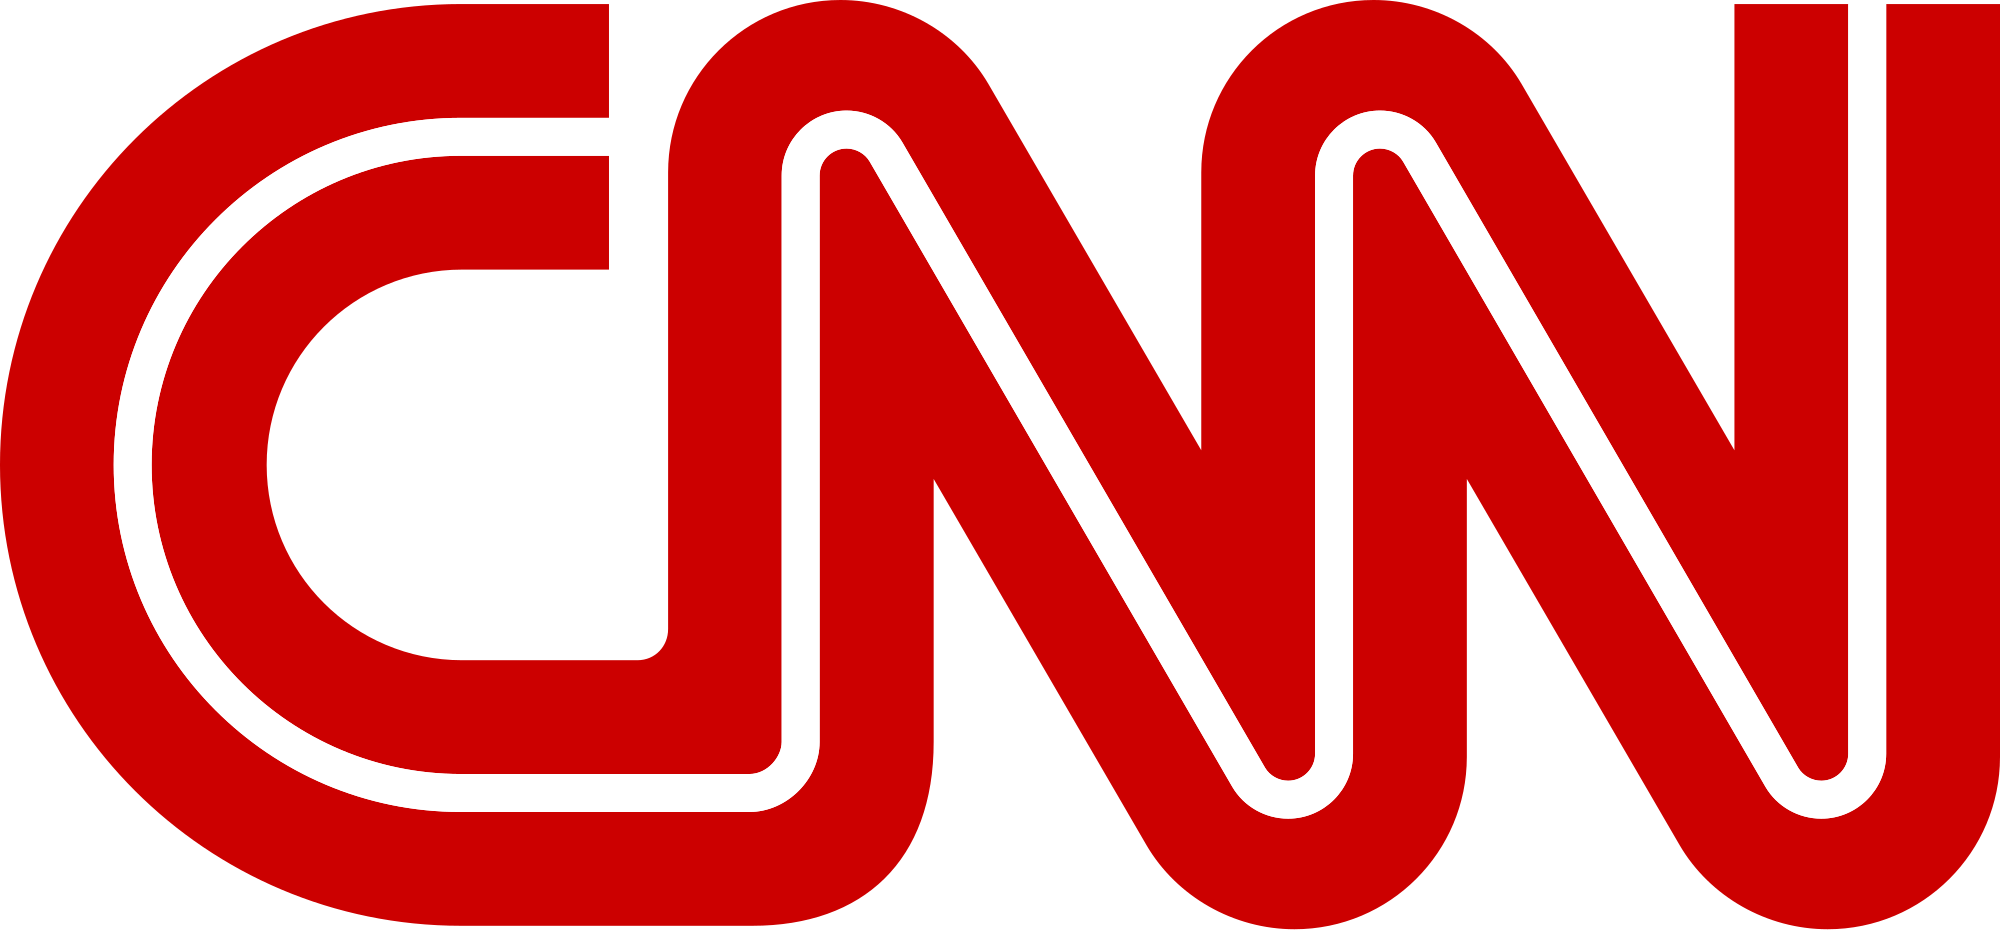 CNN Logo - File:CNN.svg - Wikimedia Commons